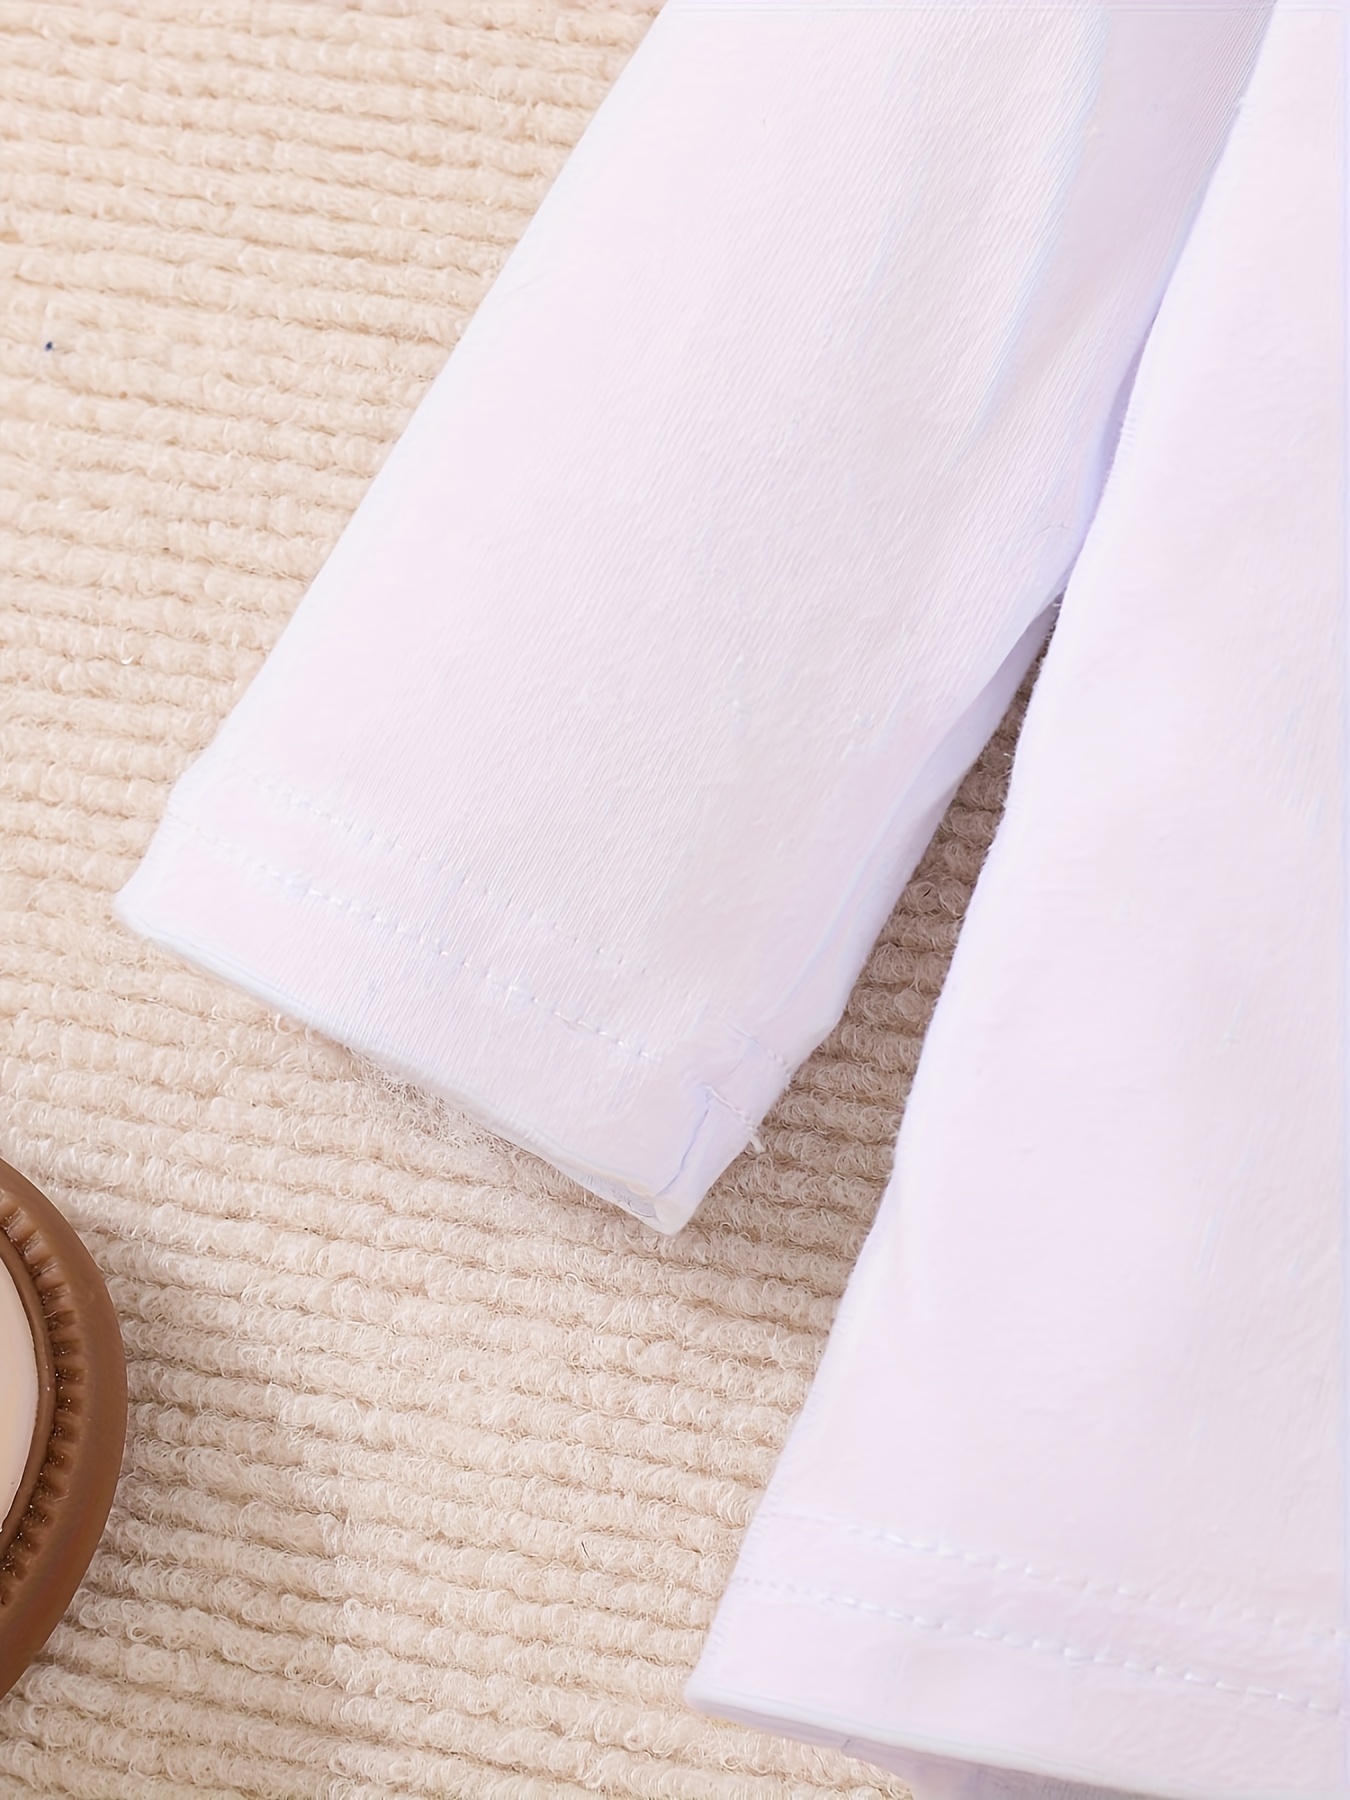 White Color Cartoon Print on Cotton Poplin Dress Material Fabric